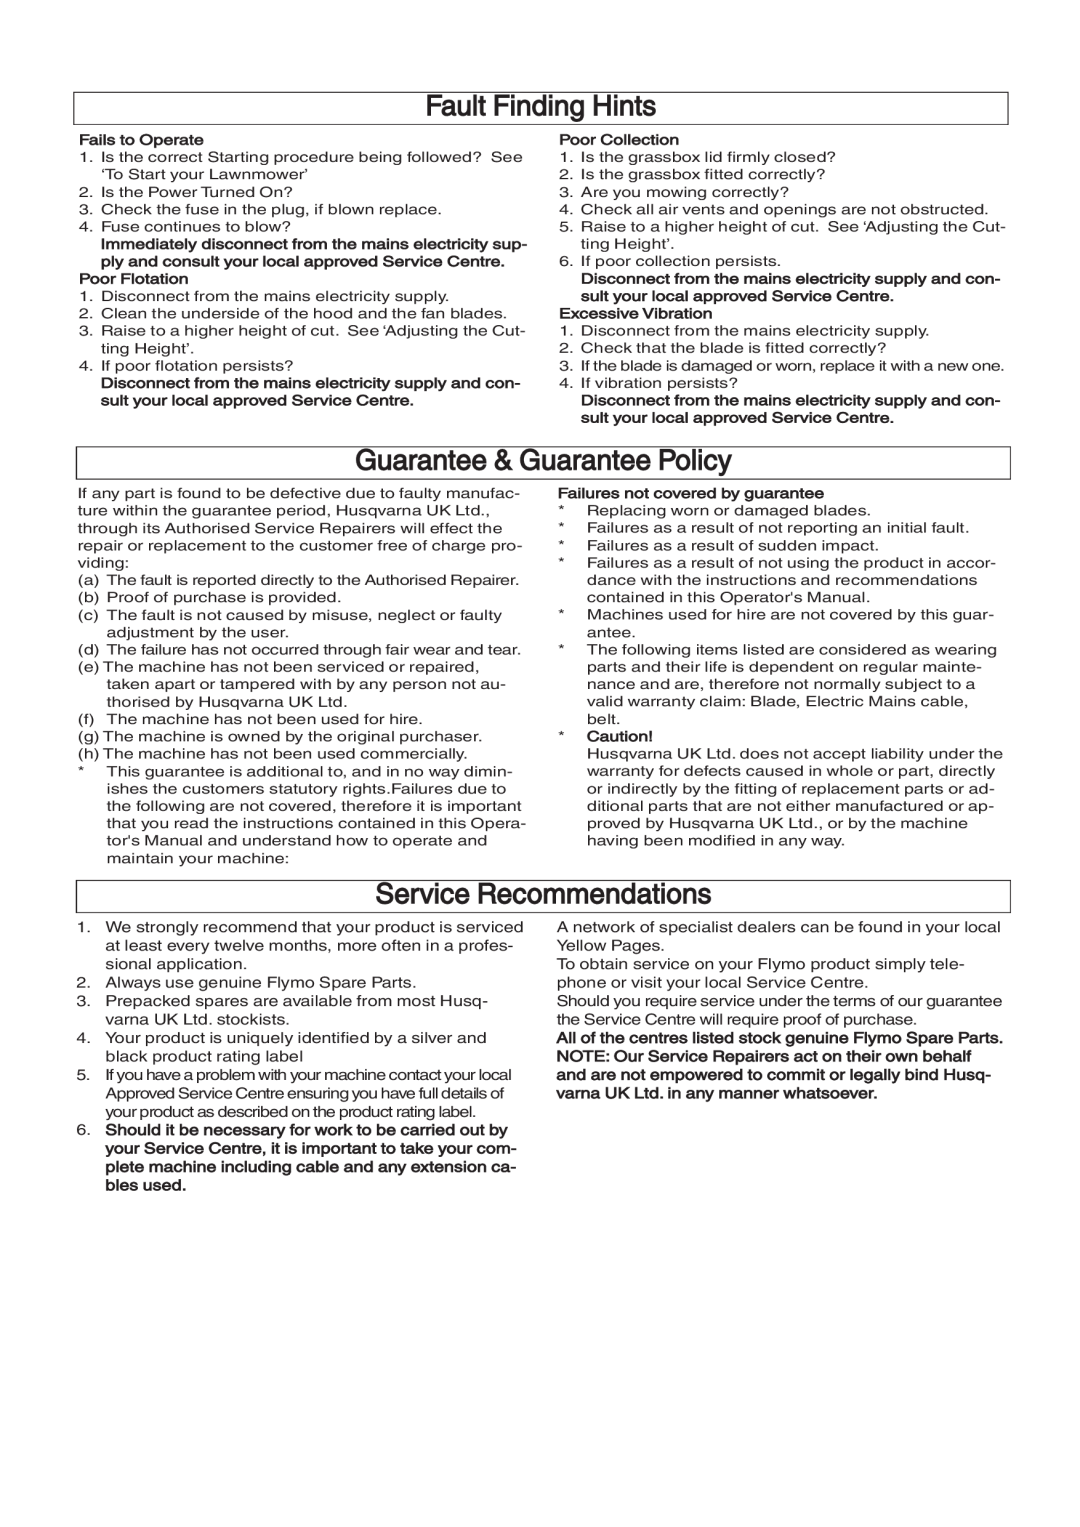 Husqvarna 360, 380 manual Fault Finding Hints, Guarantee & Guarantee Policy, Service Recommendations 